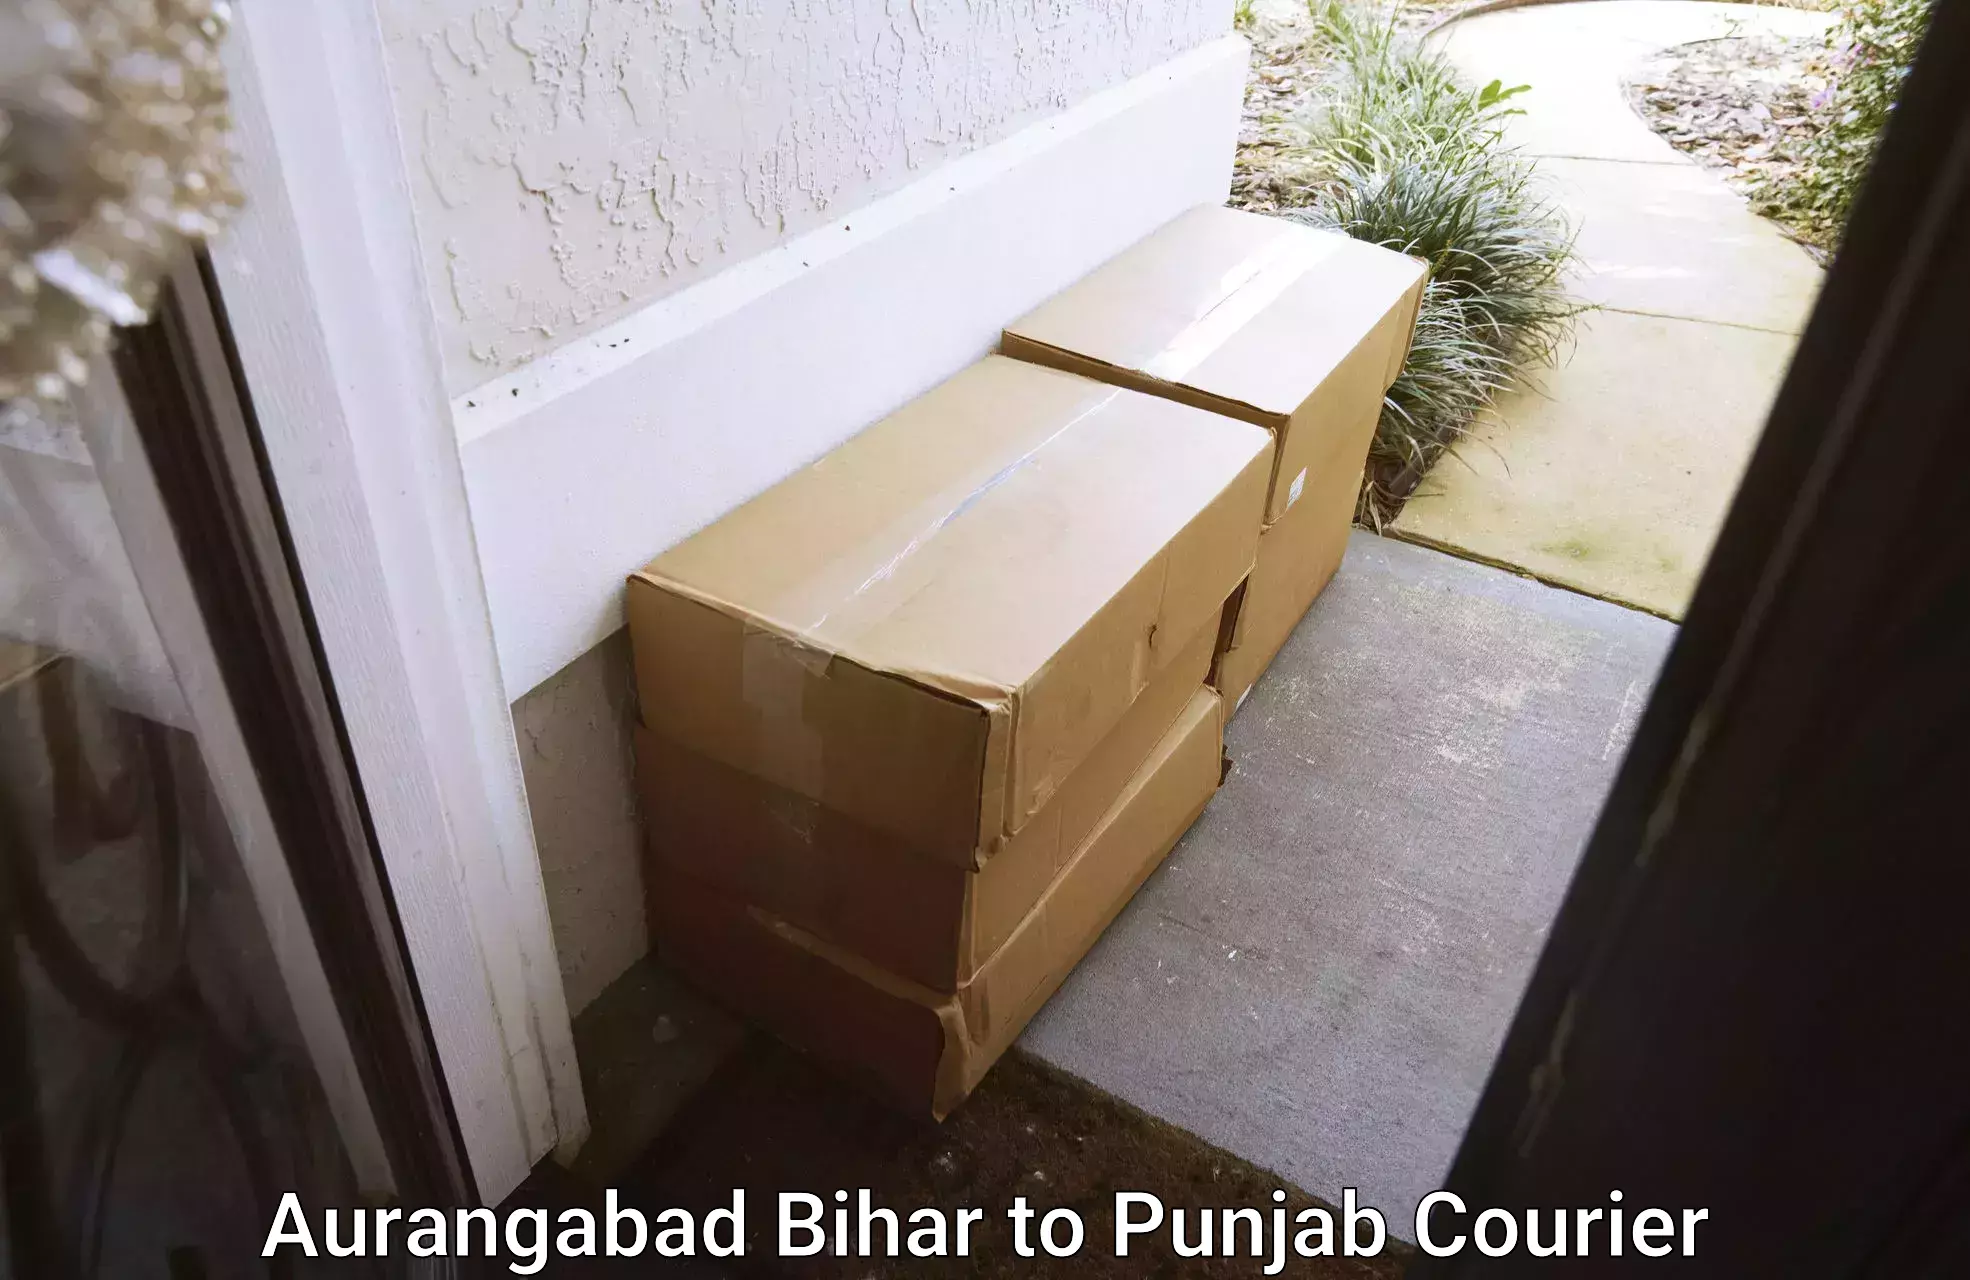 Efficient packing and moving Aurangabad Bihar to Tarsikka